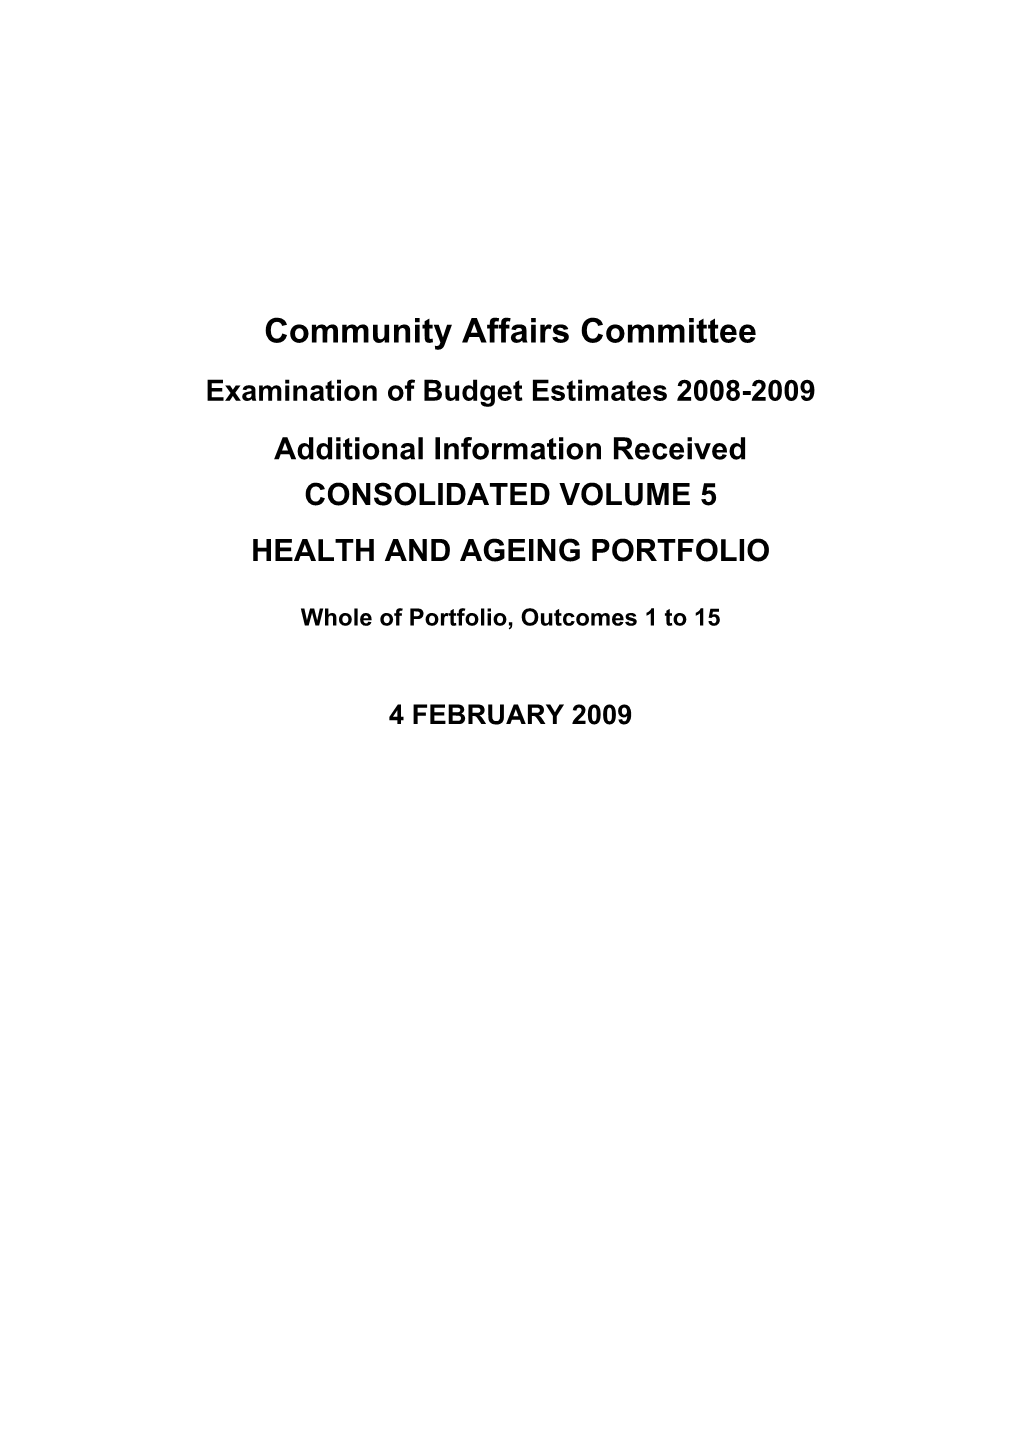 Budget Estimates 2008-09